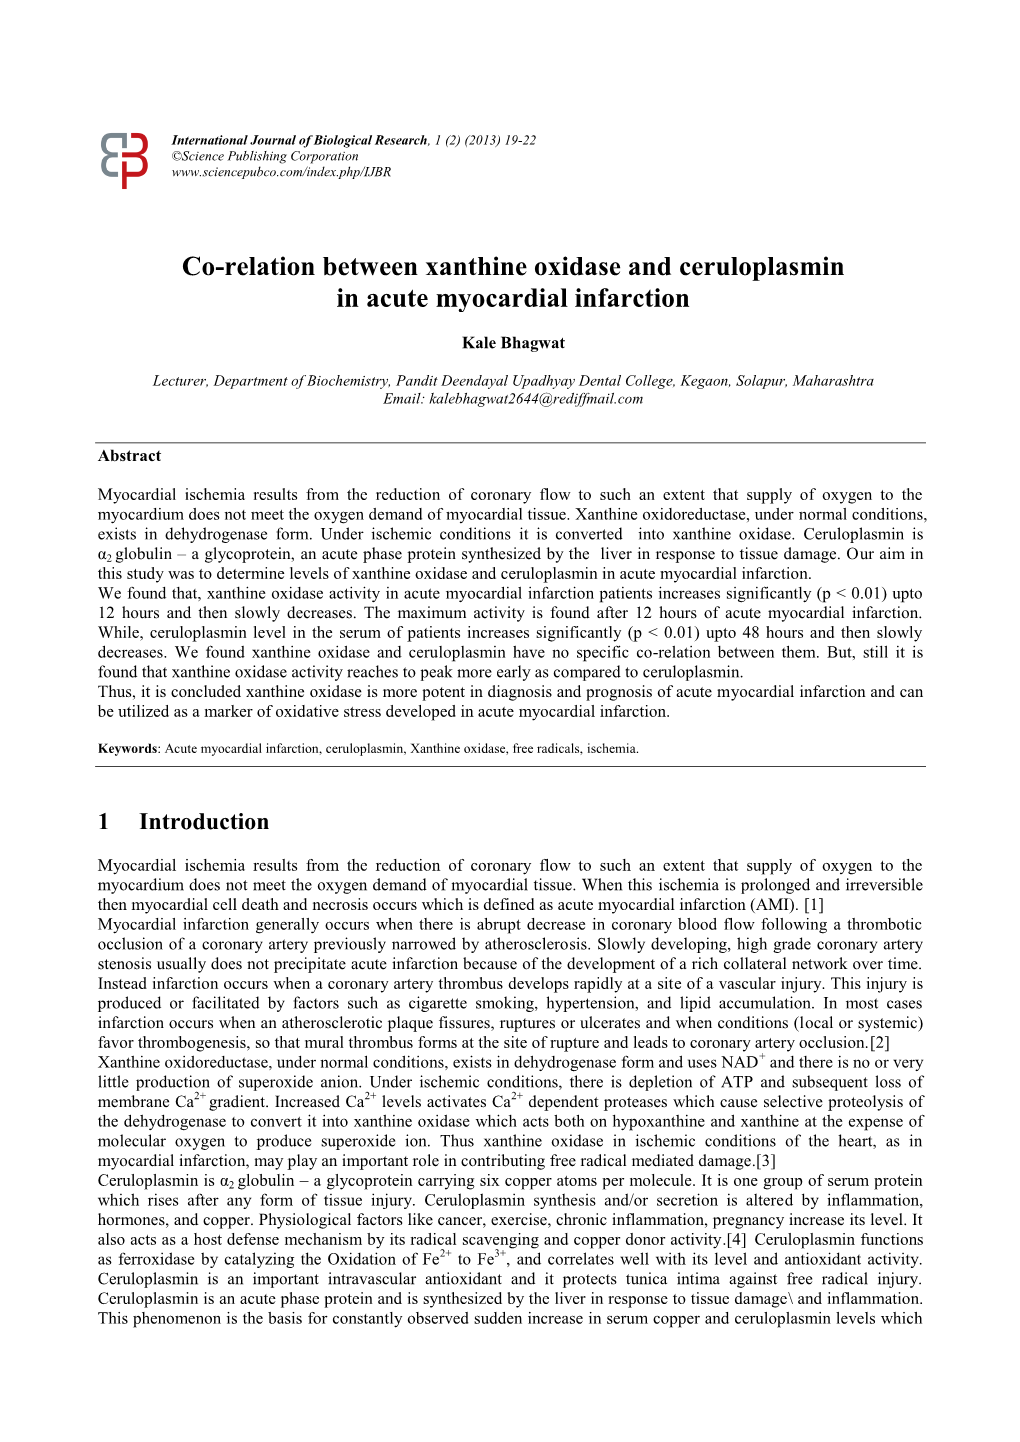 Co-Relation Between Xanthine Oxidase and Ceruloplasmin in Acute Myocardial Infarction